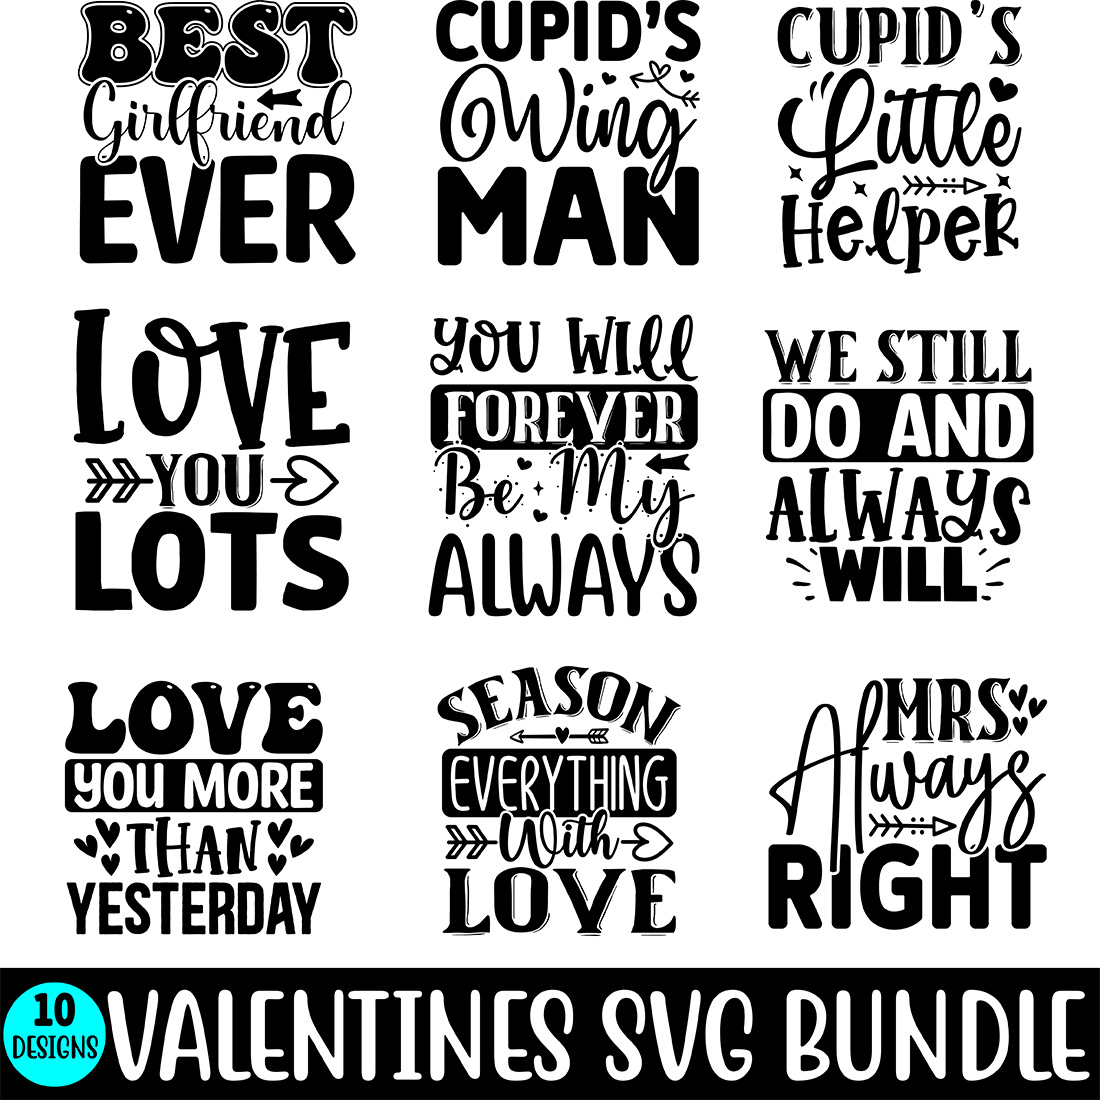 Quotes Valentines SVG Bundle Design cover image.